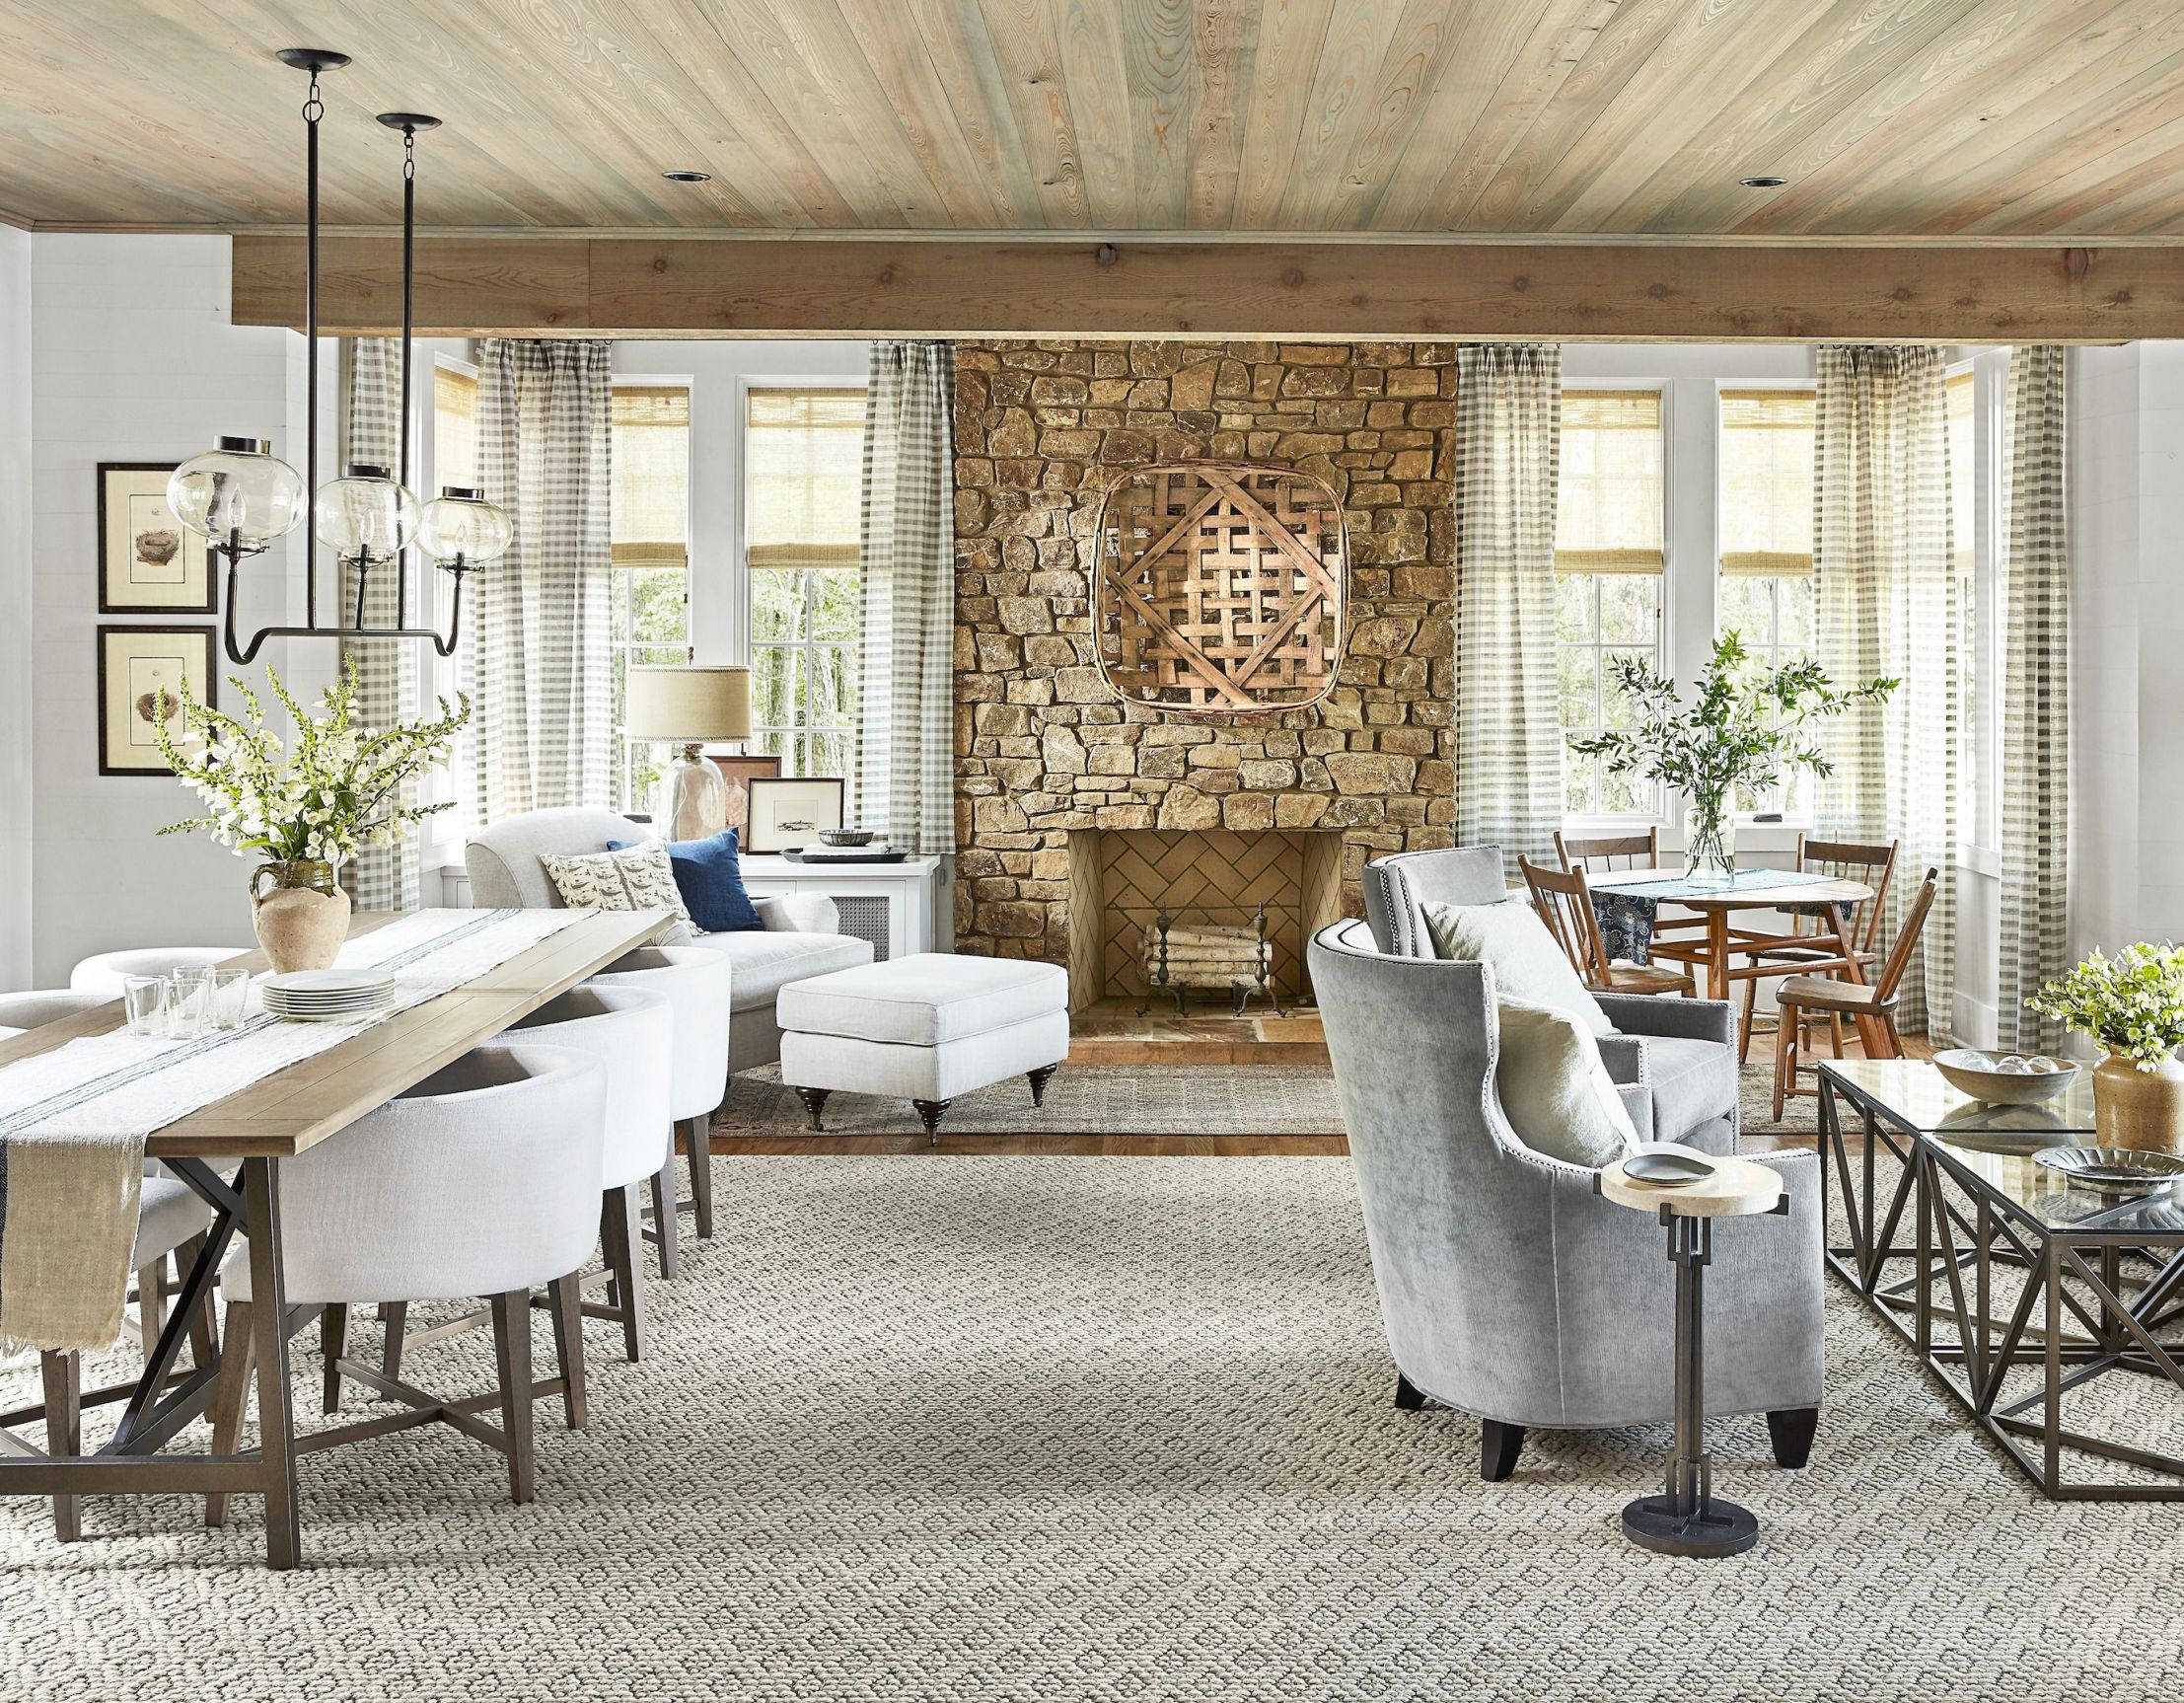  Fantastic Rustic Living Room Interior Design 